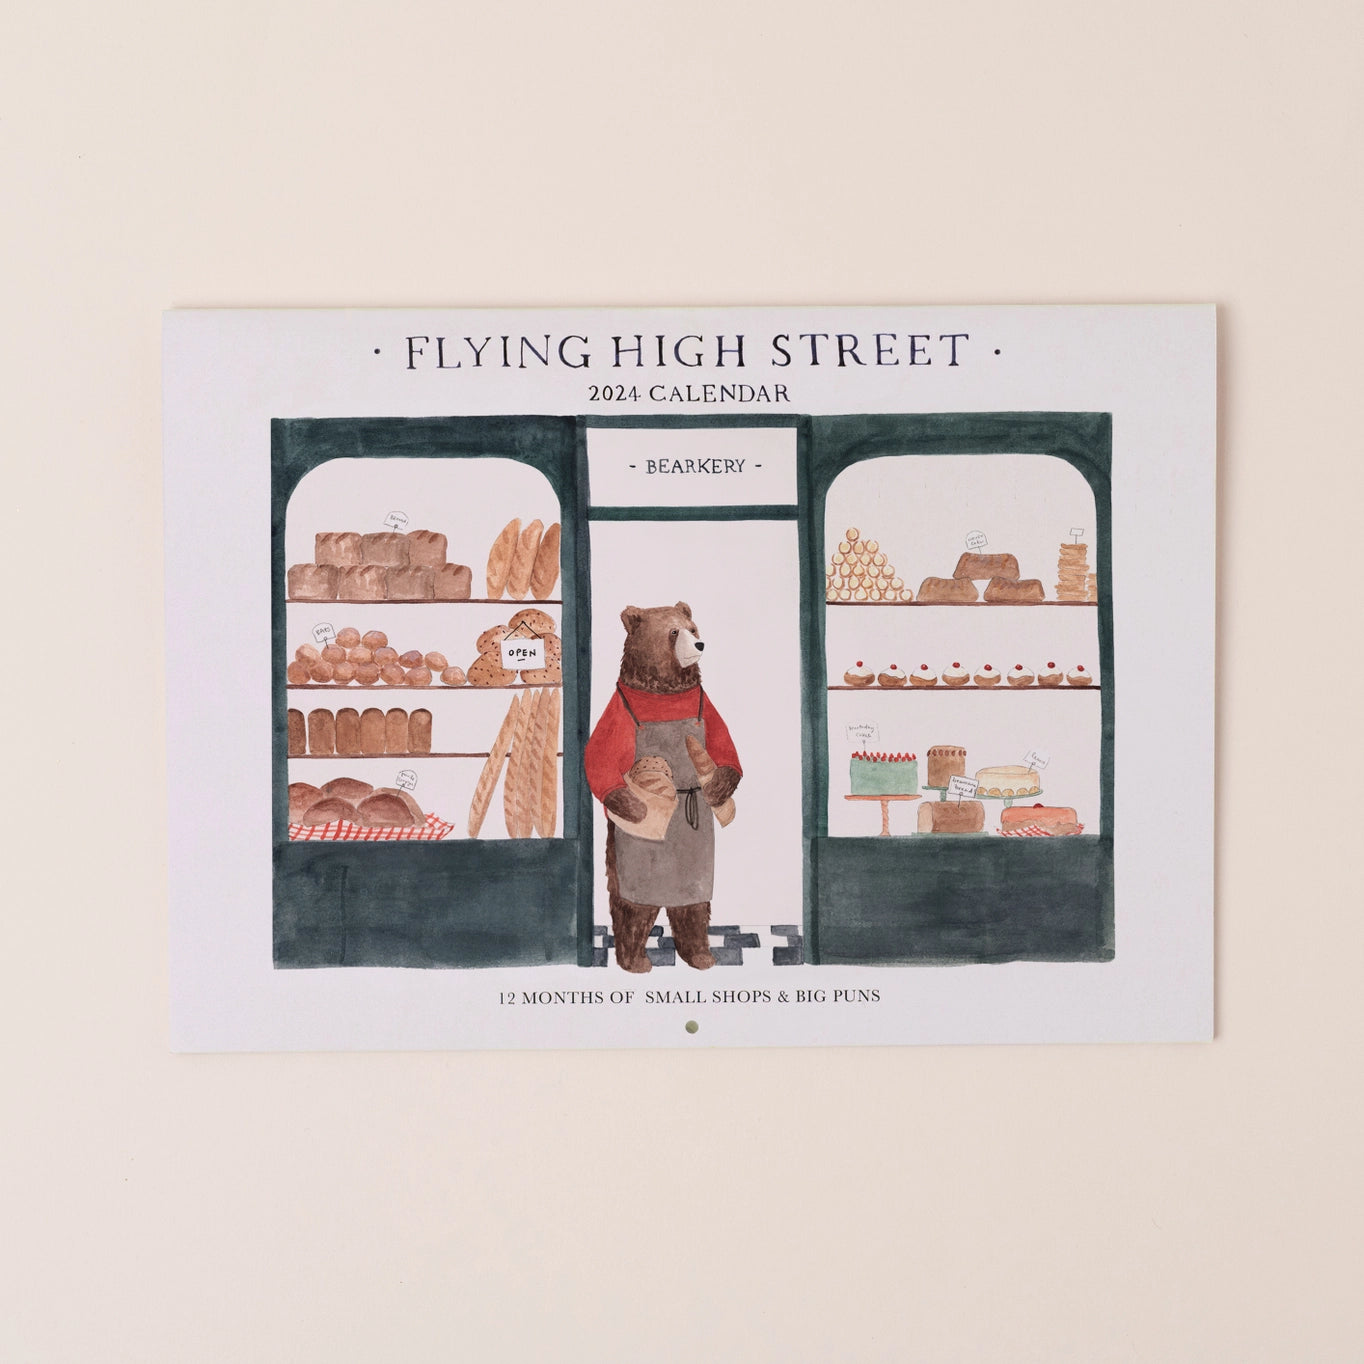 'Flying High Street' 2024 Calendar